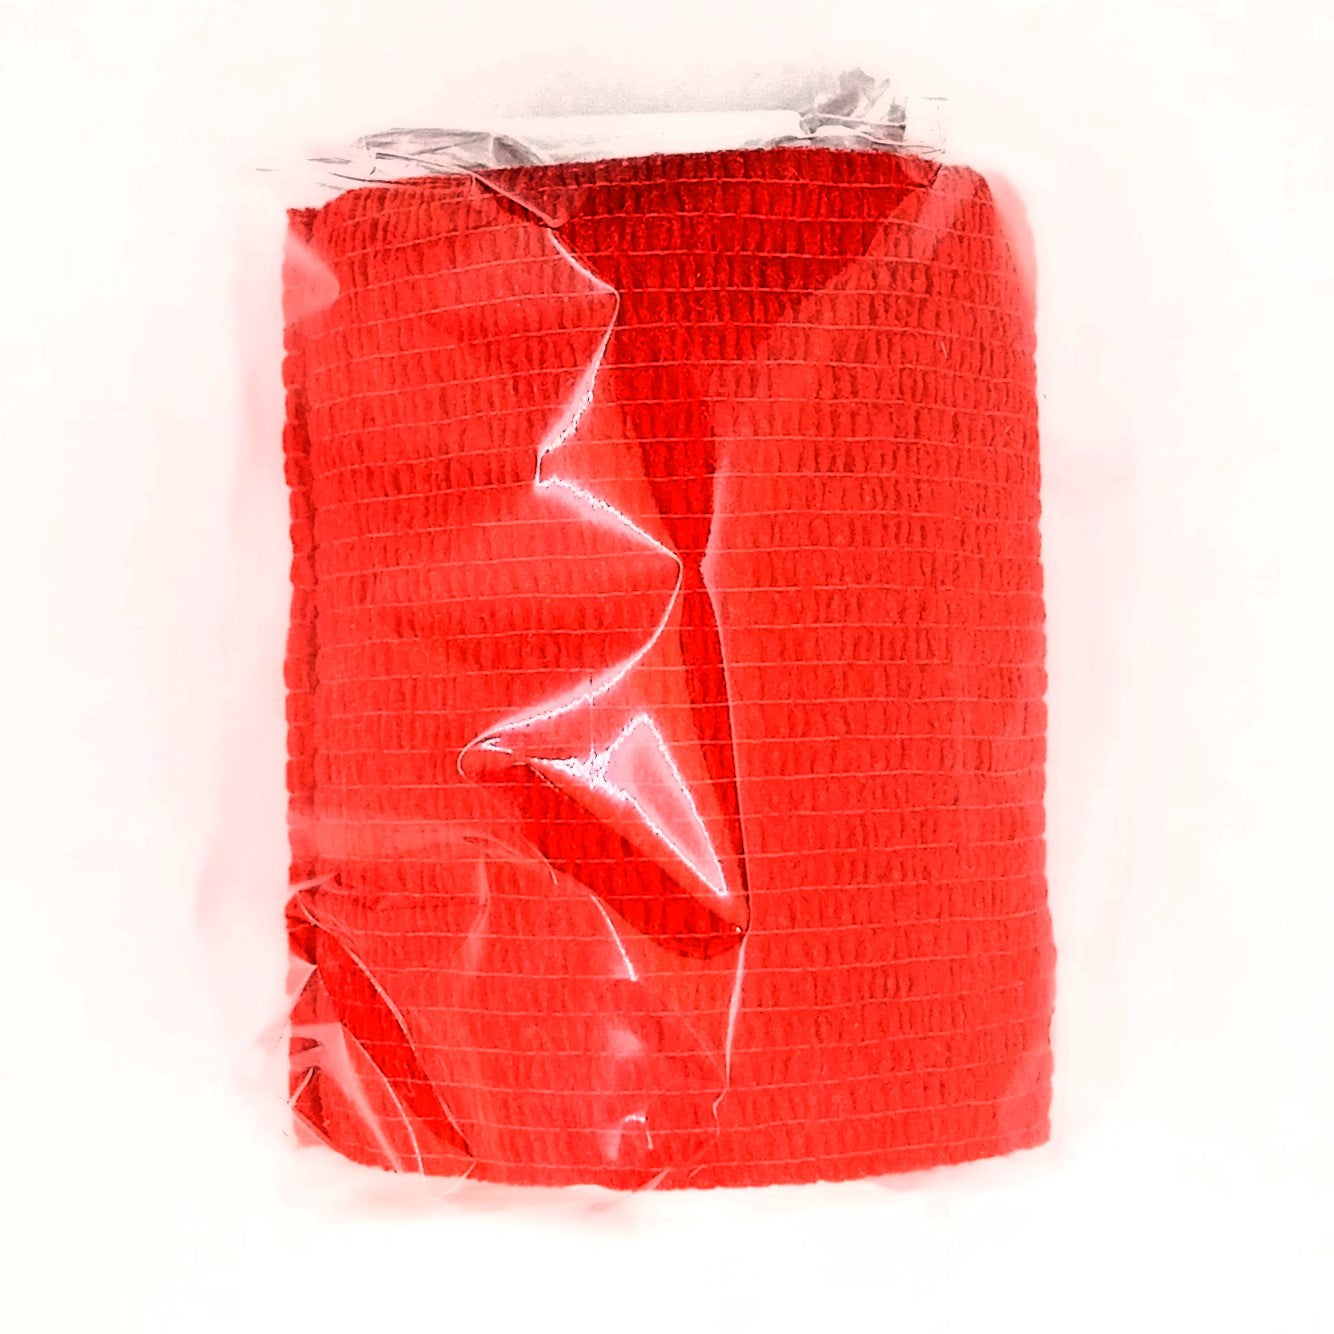 Wickelbandage für Hundehaare, elastische selbsthaftende Bandage